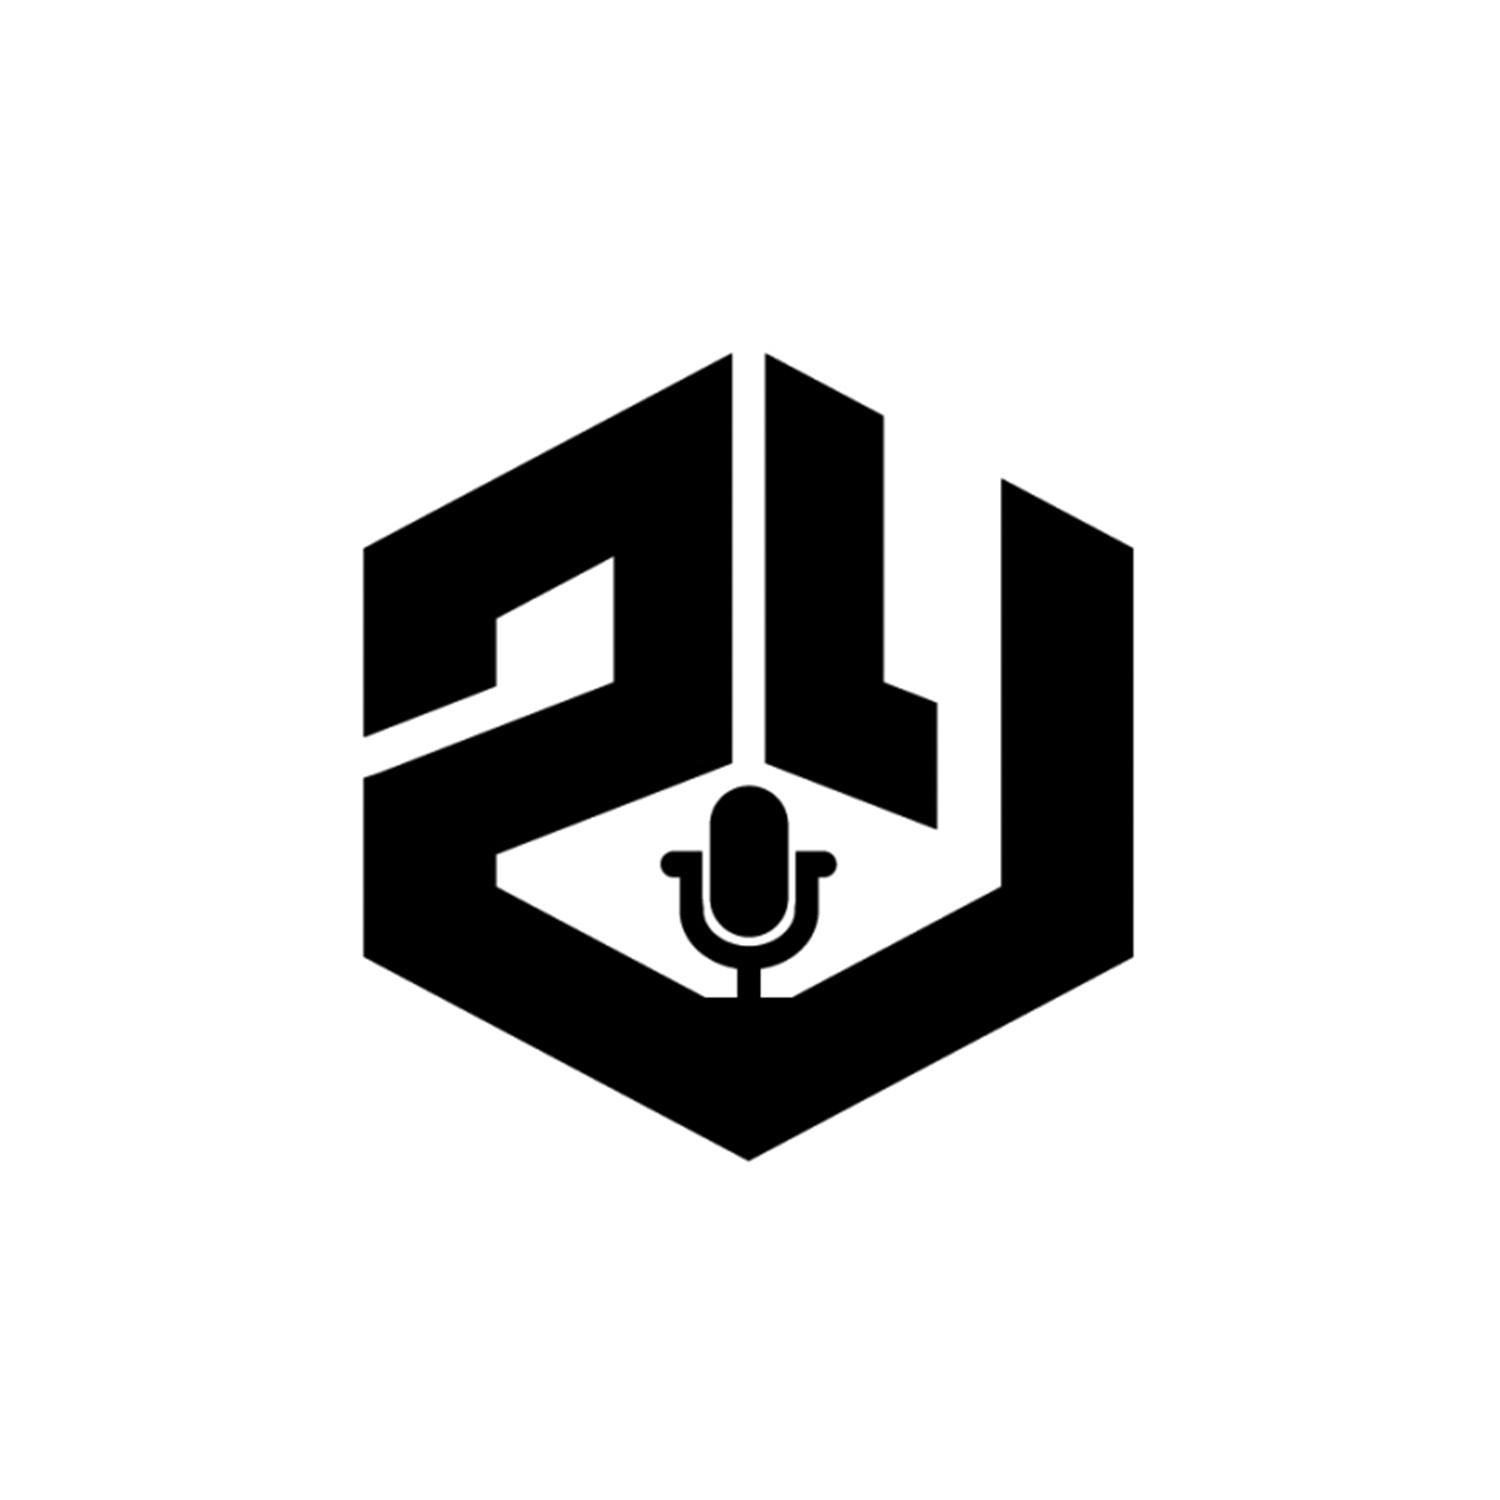 zy字母logo图片